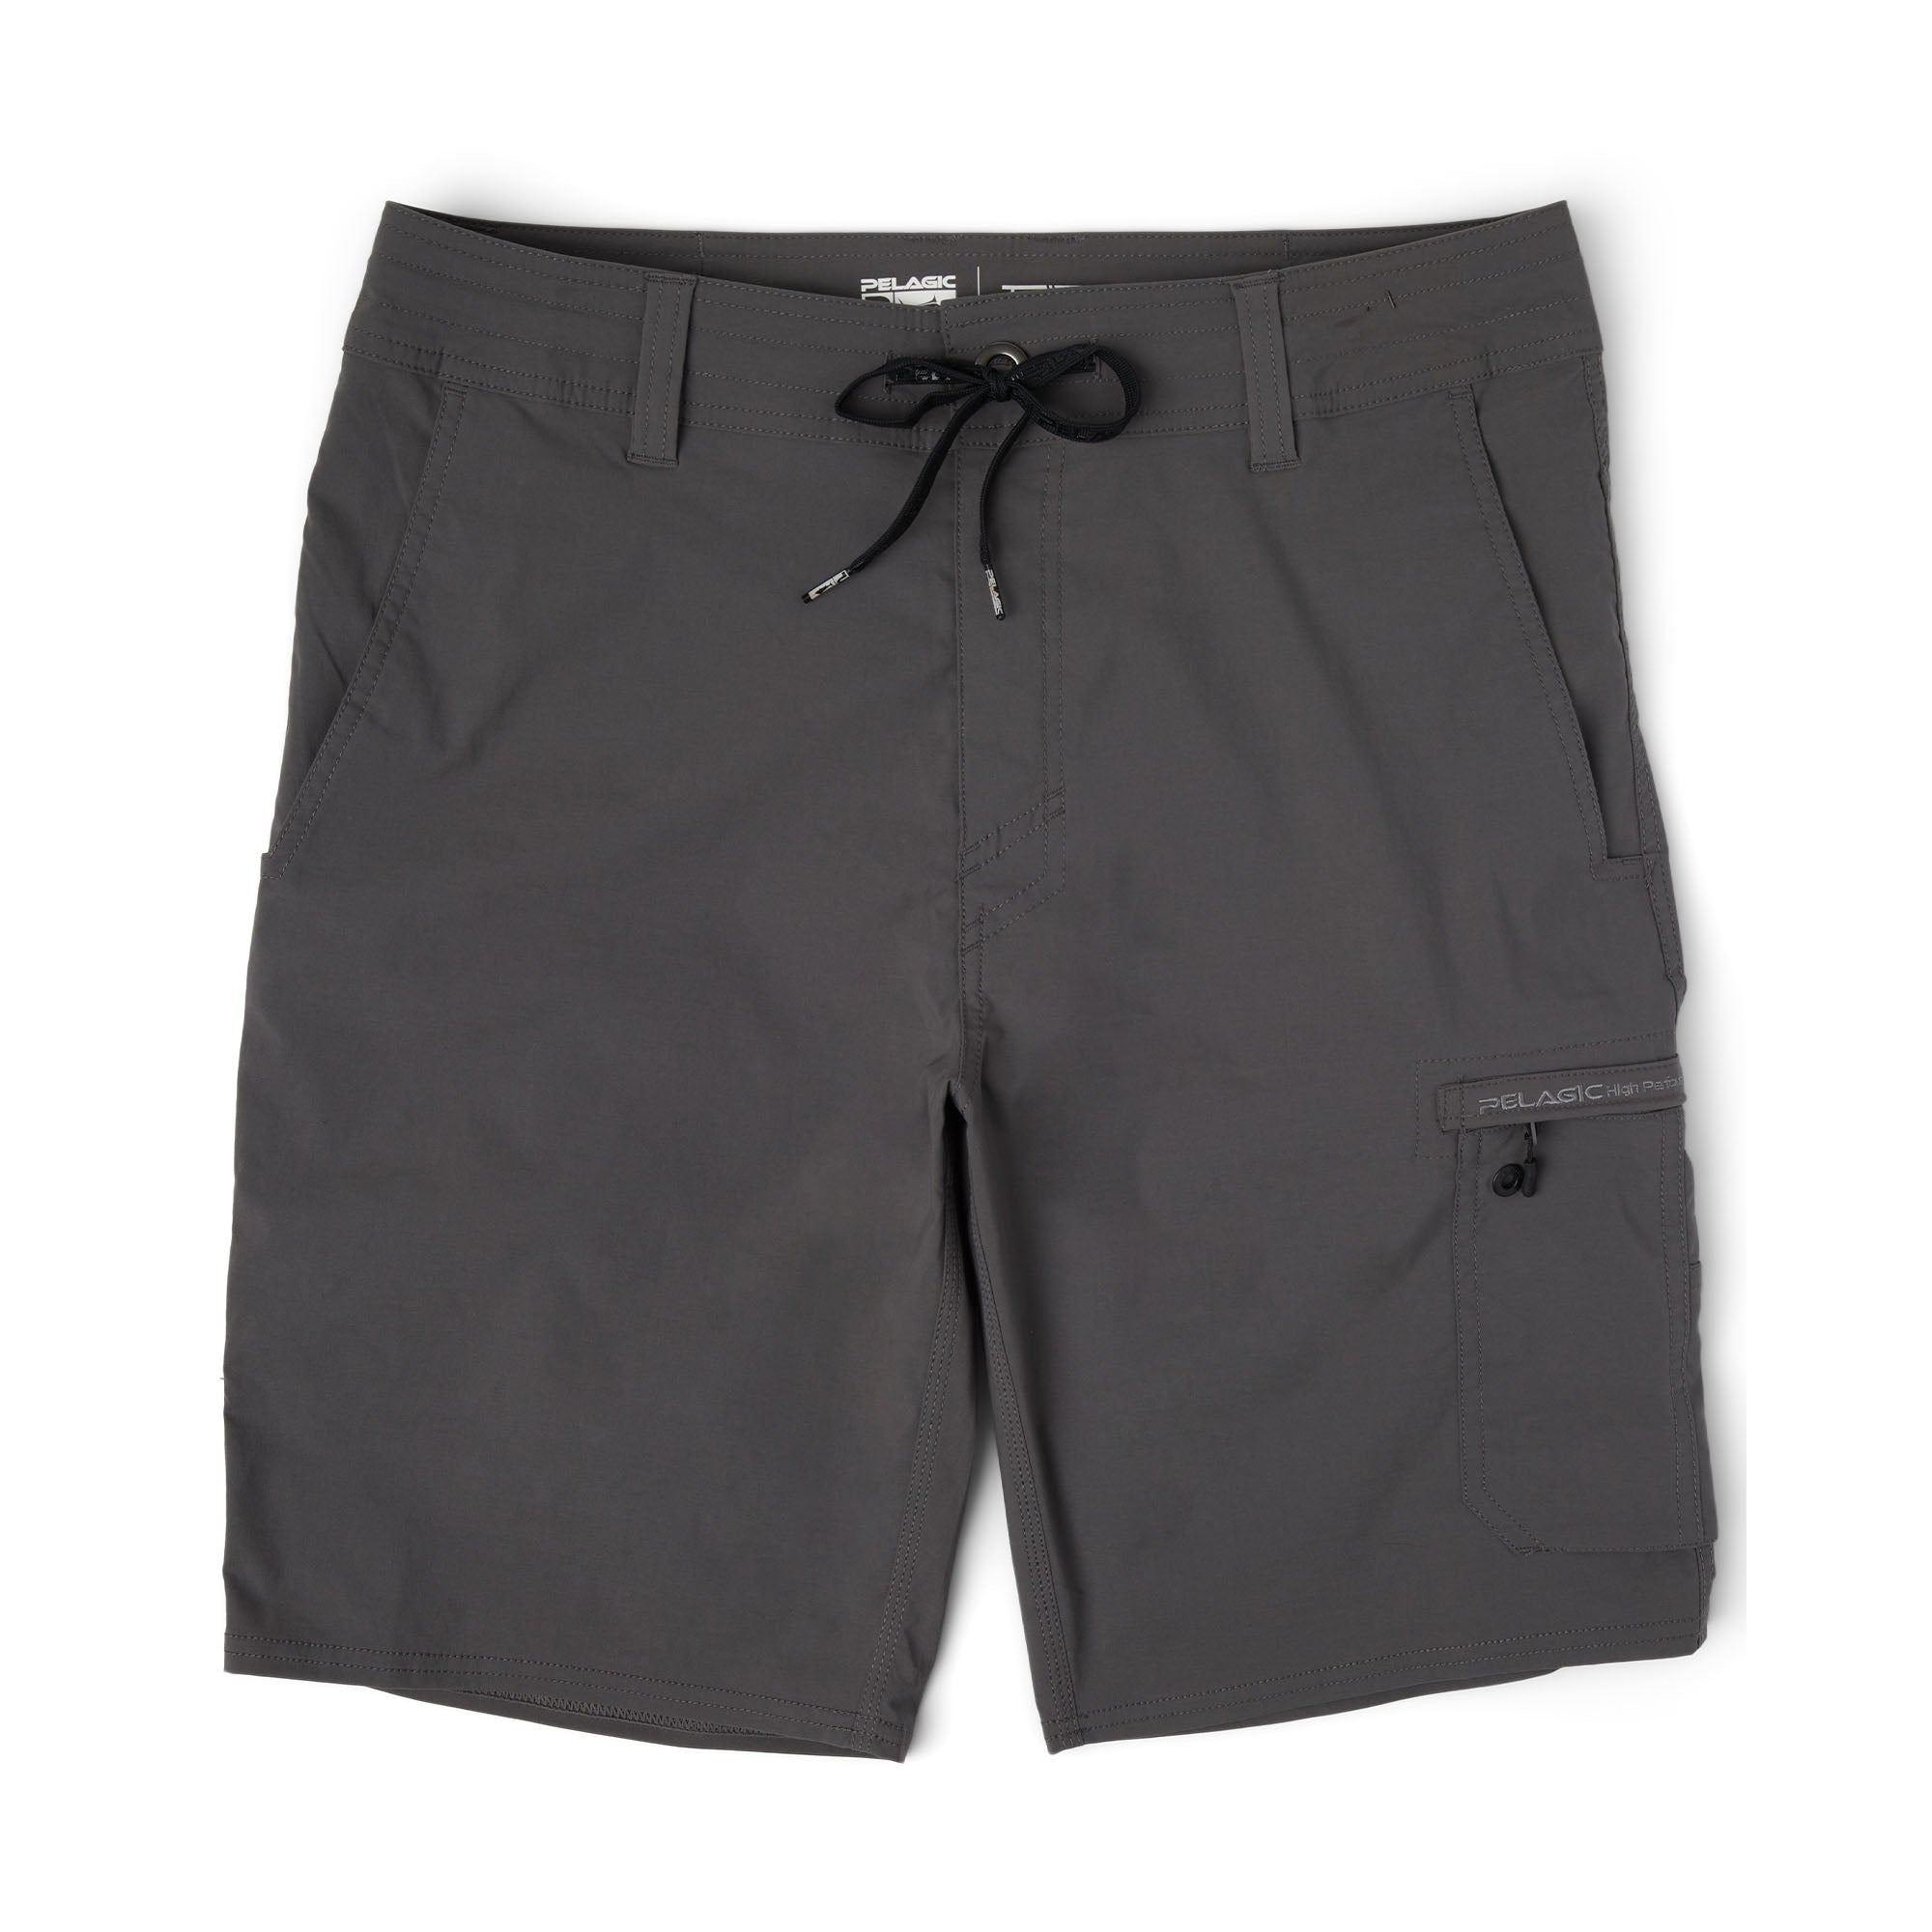 Pelagic Traverse Hybrid Shorts 20 34 / Charcoal